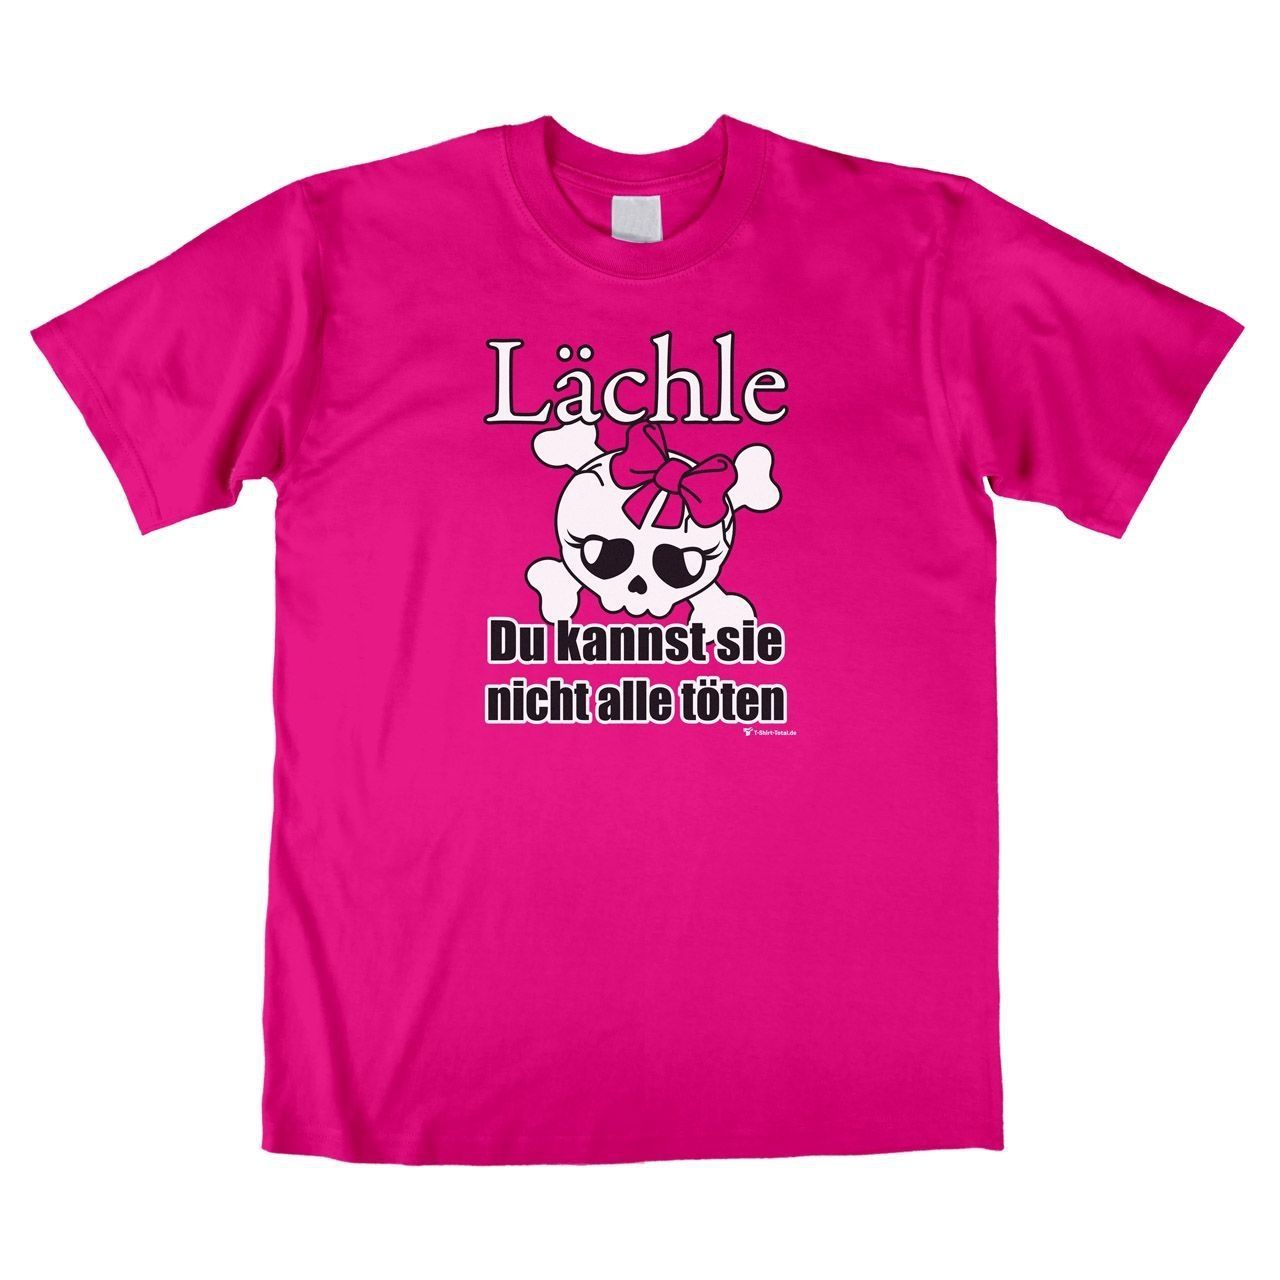 Lächle Unisex T-Shirt pink Medium